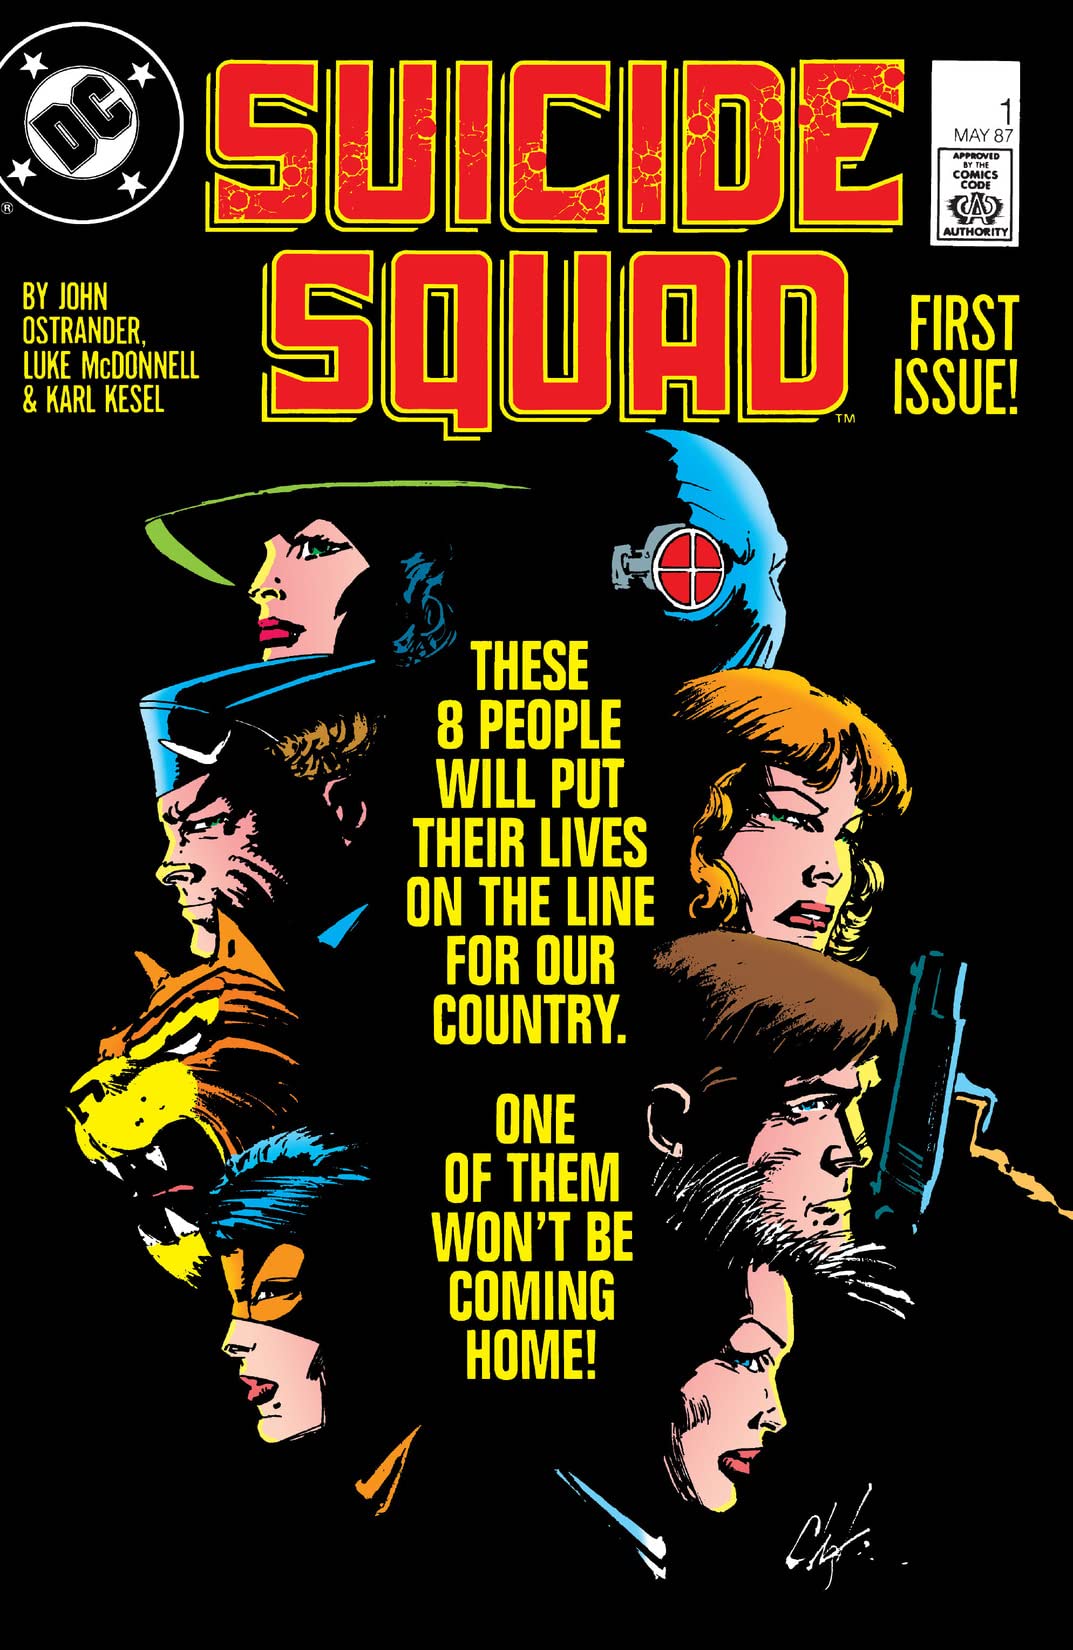 Suicide Squad: Character Origins & Team Roles Explained